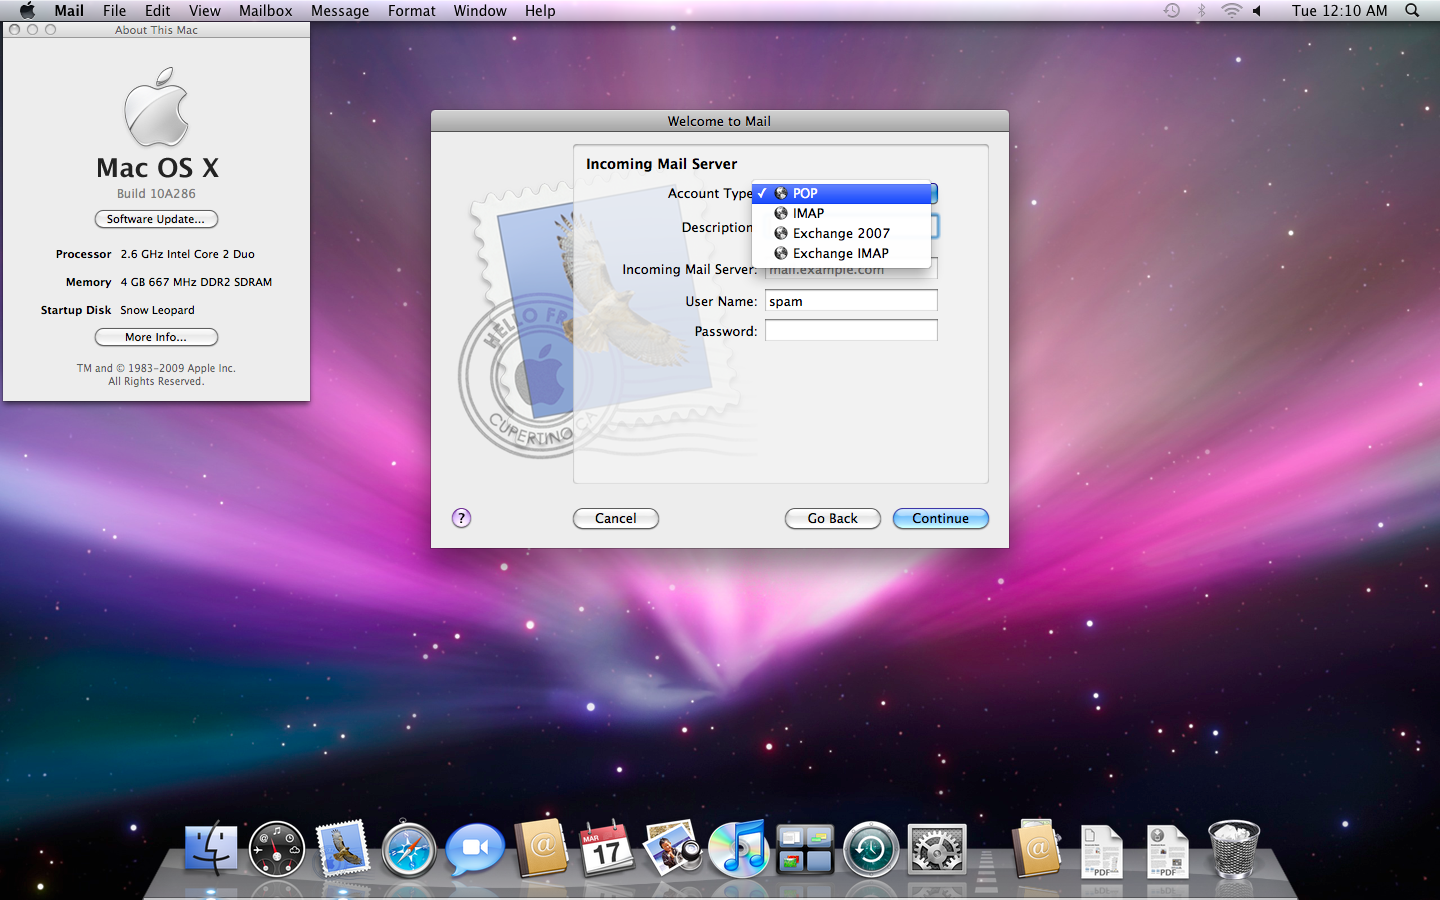 Download mac os x10.6 snow leopard install dvd.dmg